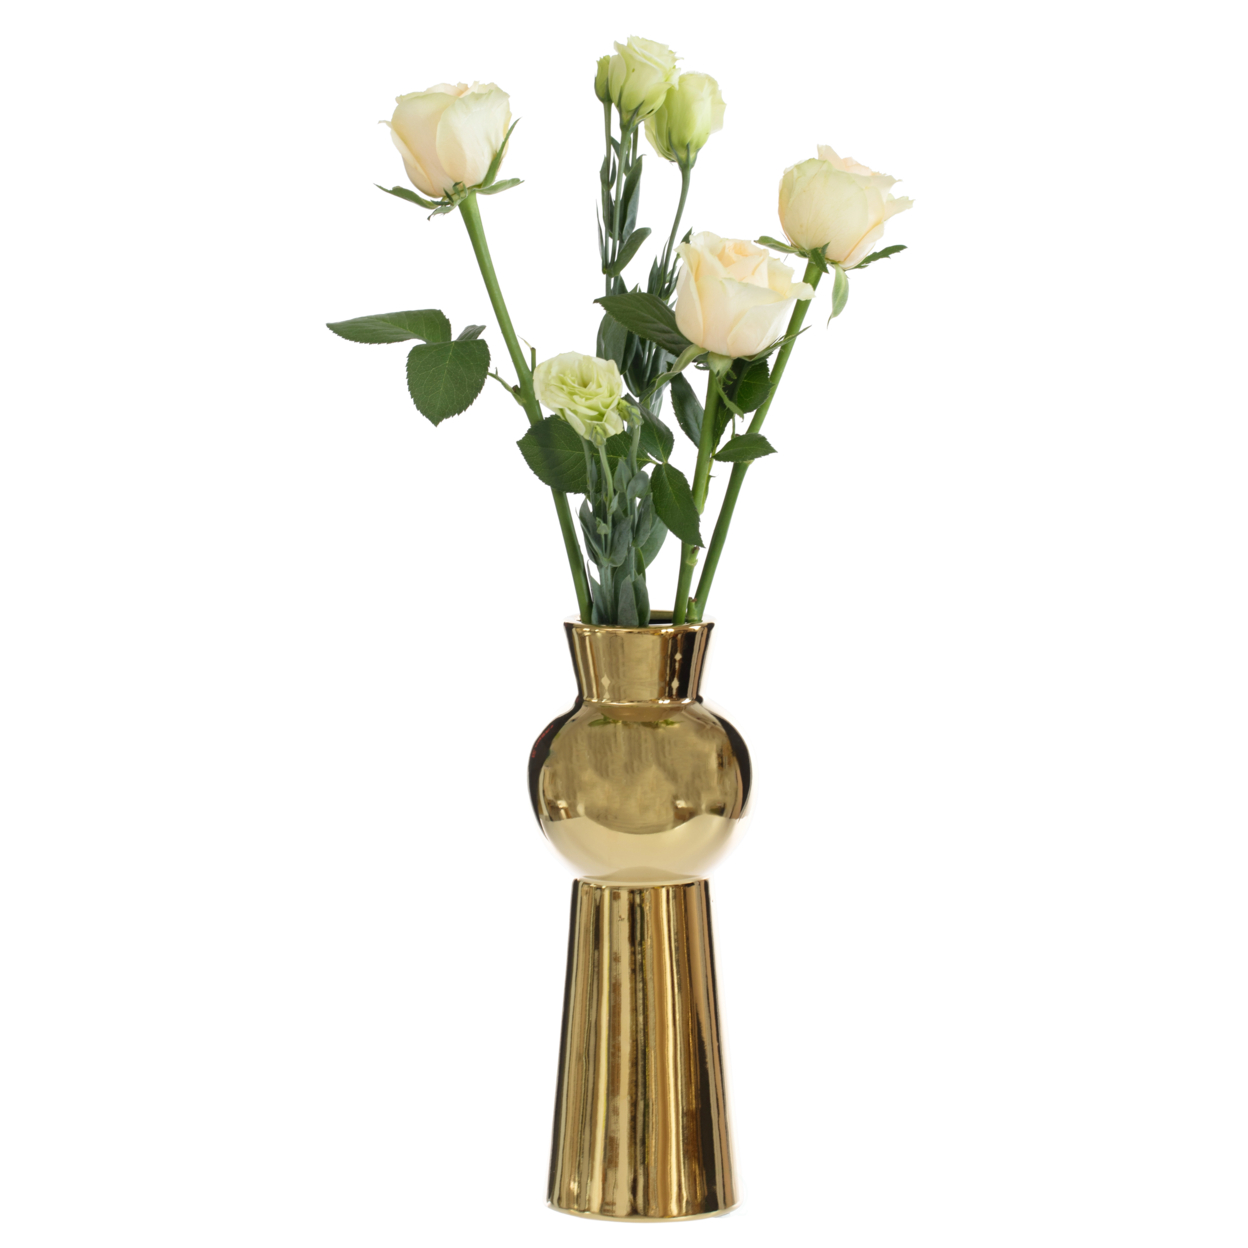 10.5 H Decorative Ceramic Ball Neck Flower Table Vase, Shiny Metallic Gold